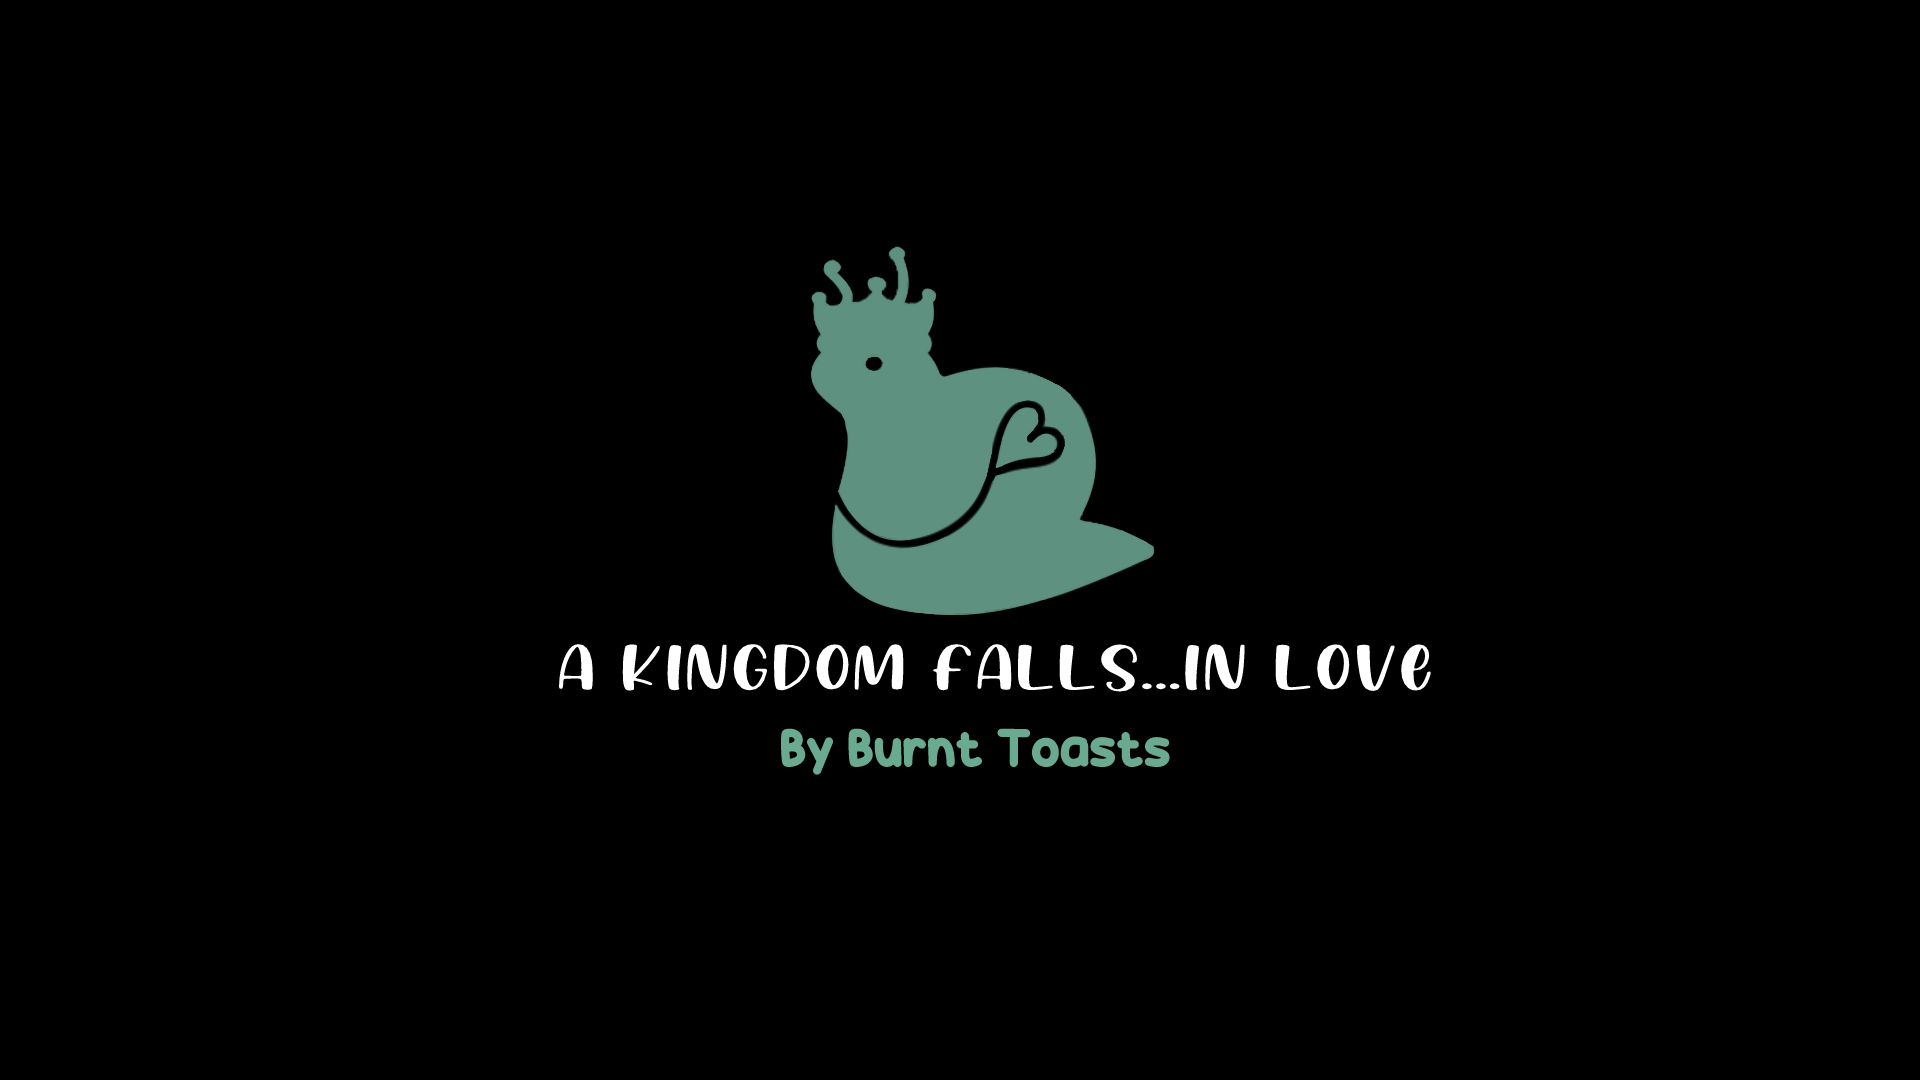 A Kingdom Falls...IN LOVE